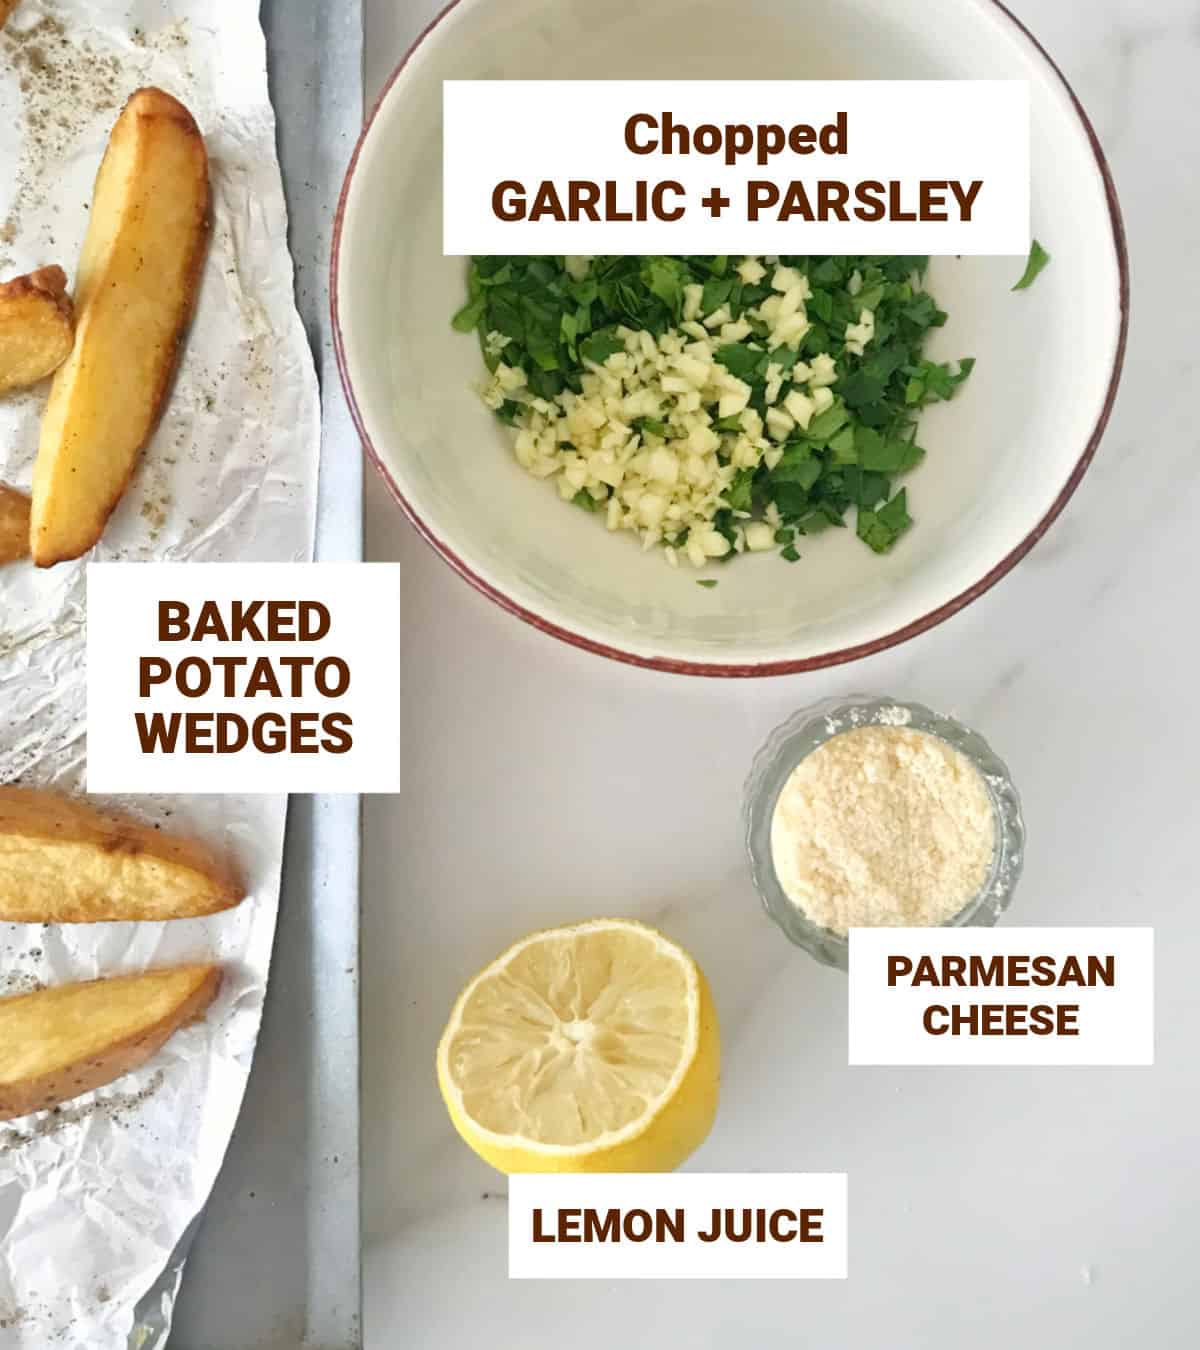 Chopped garlic and parsley, parmesan in bowls, half a lemon, potato wedges, white surface.